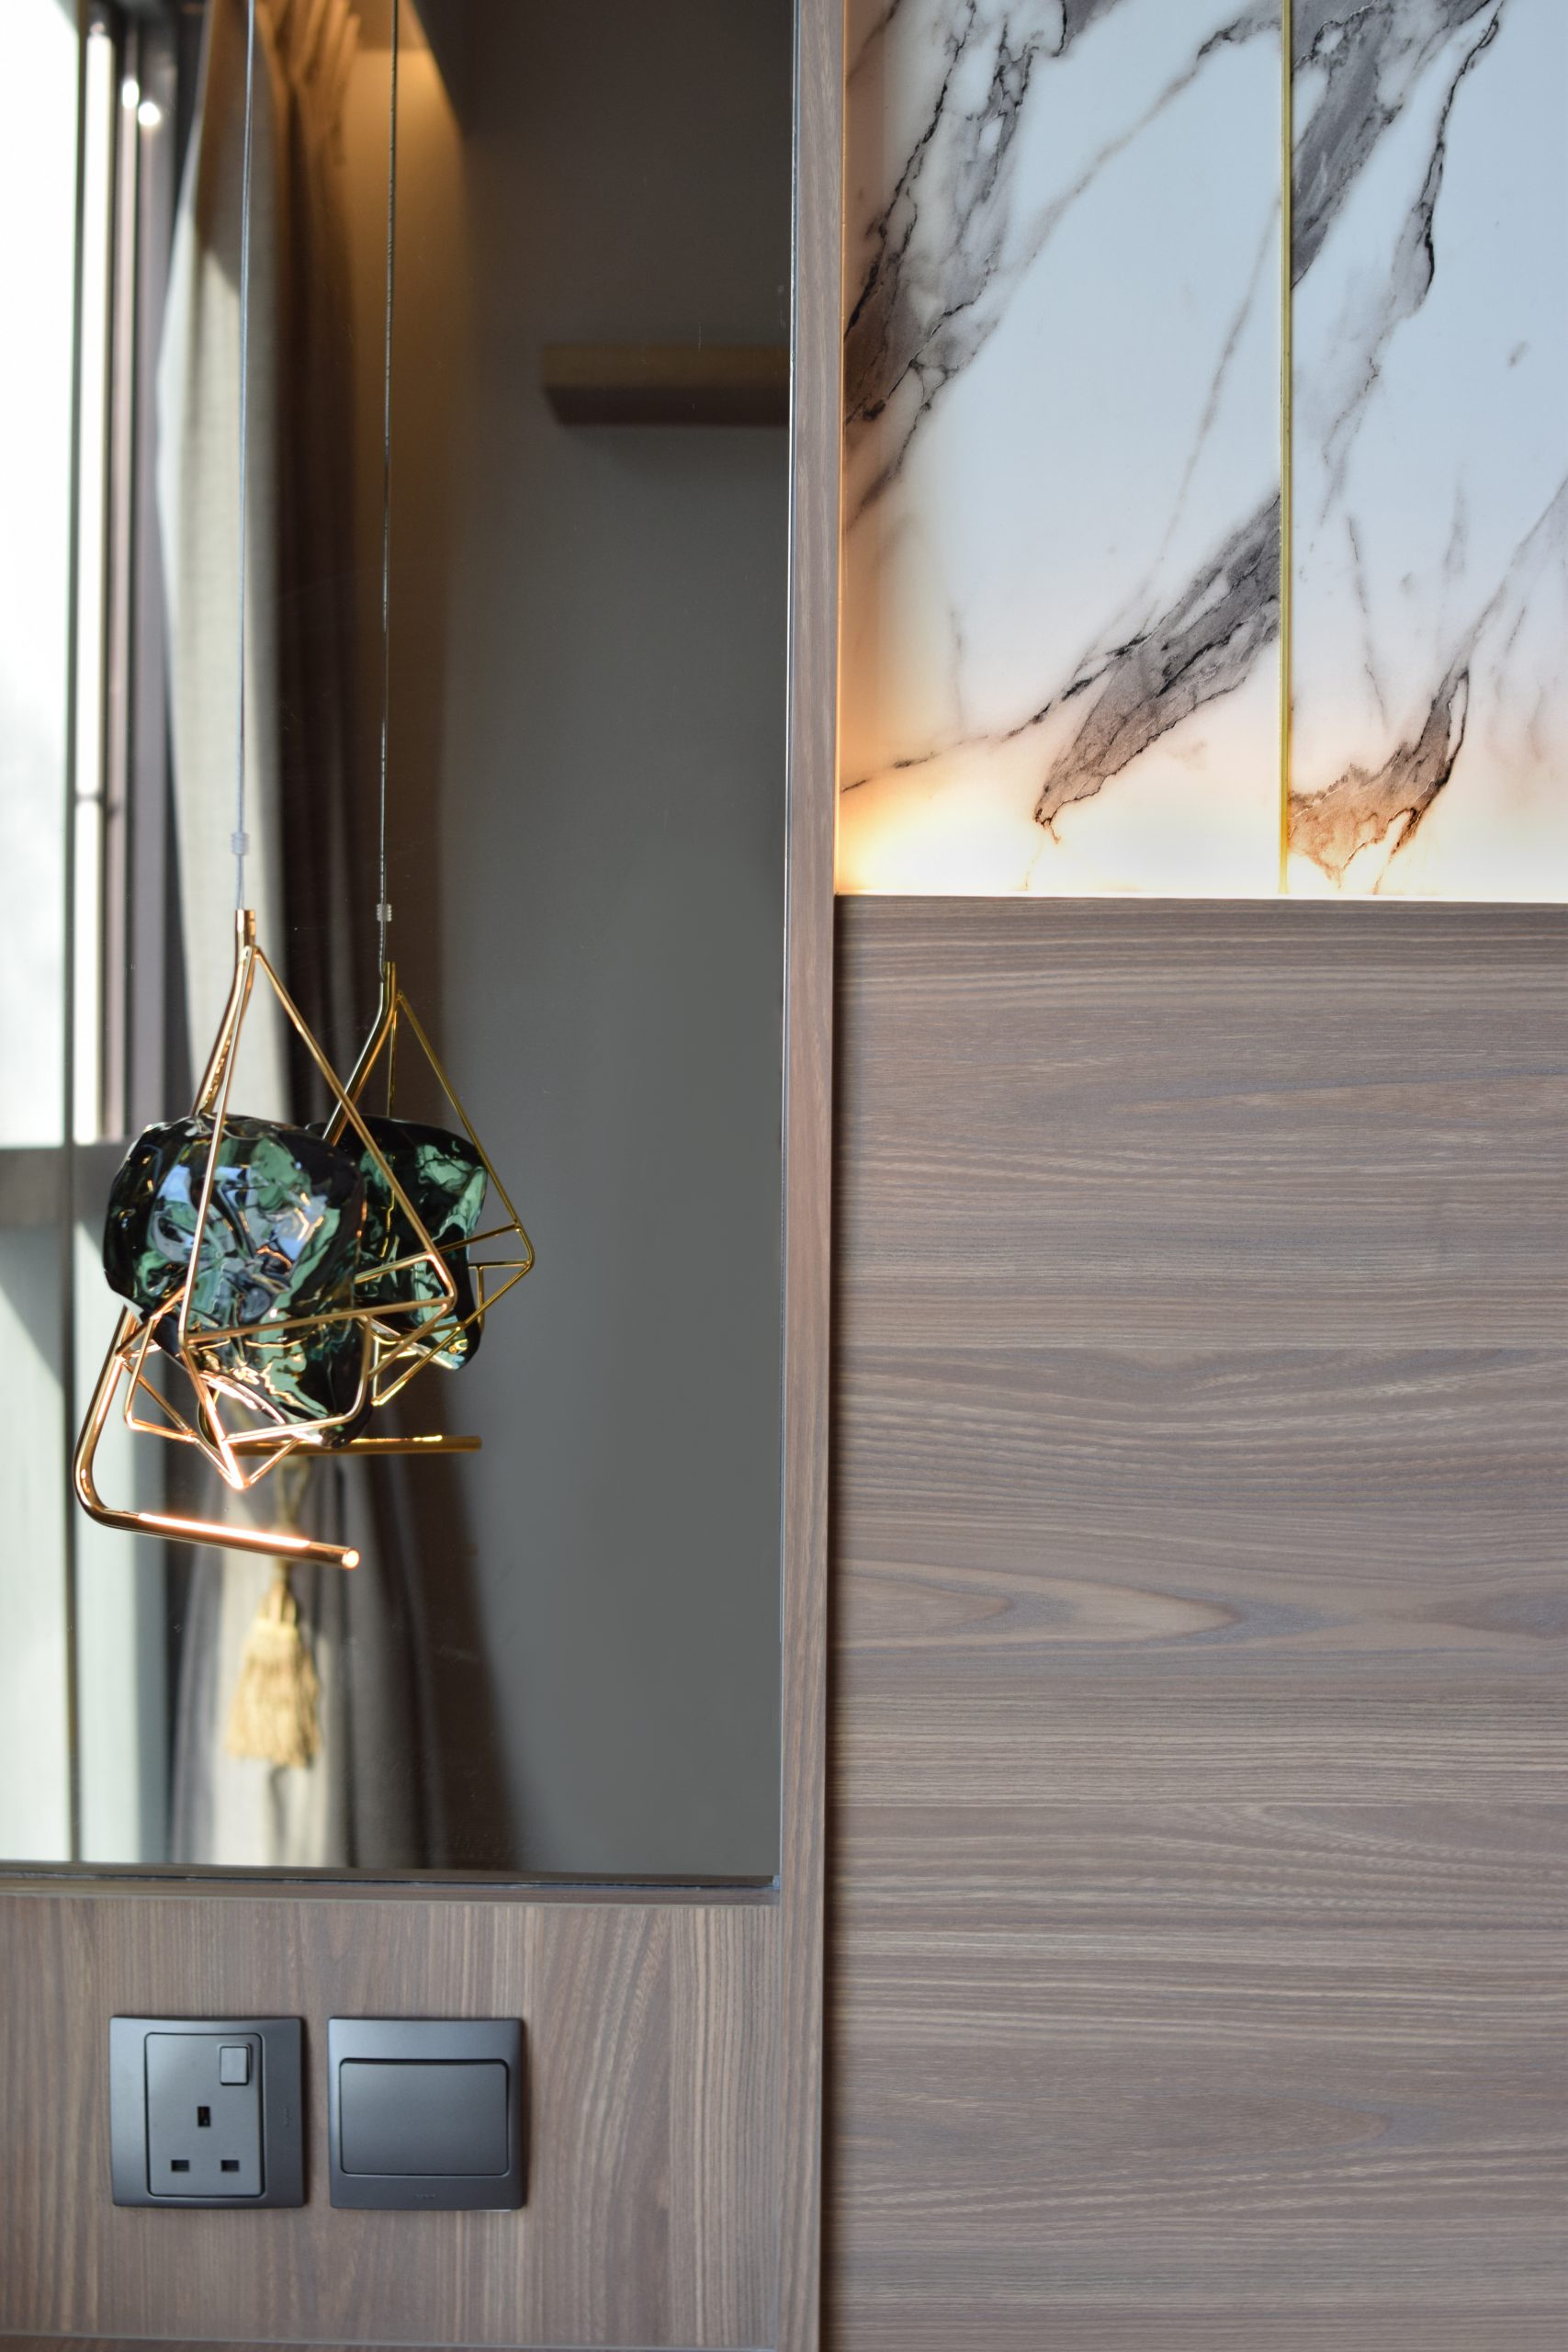 Bedside mirror and pendant light for modern luxury condo interior design